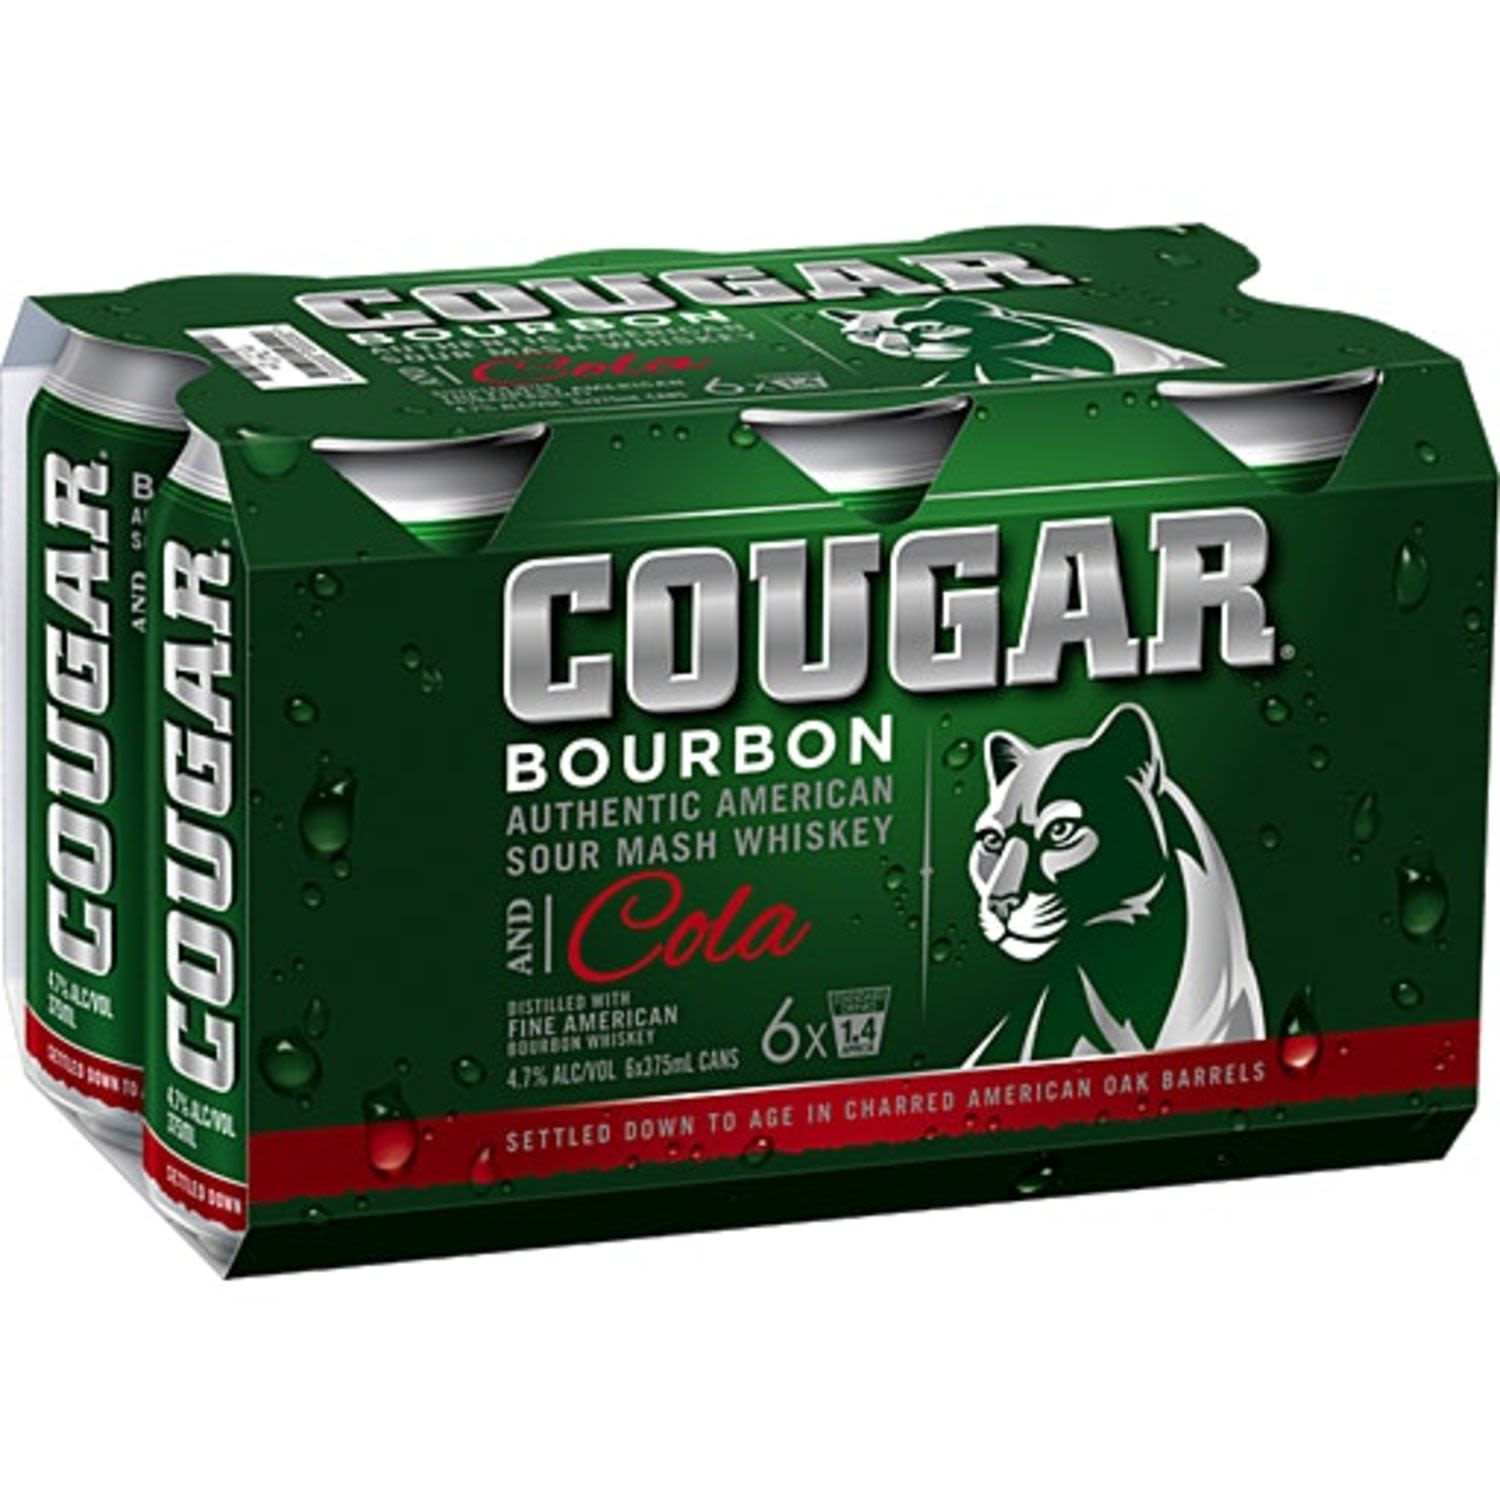 Cougar Bourbon and Cola Cans 375mL<br /> <br />Alcohol Volume: 4.50%<br /><br />Pack Format: 6 Pack<br /><br />Standard Drinks: 1.3</br /><br />Pack Type: Can<br />